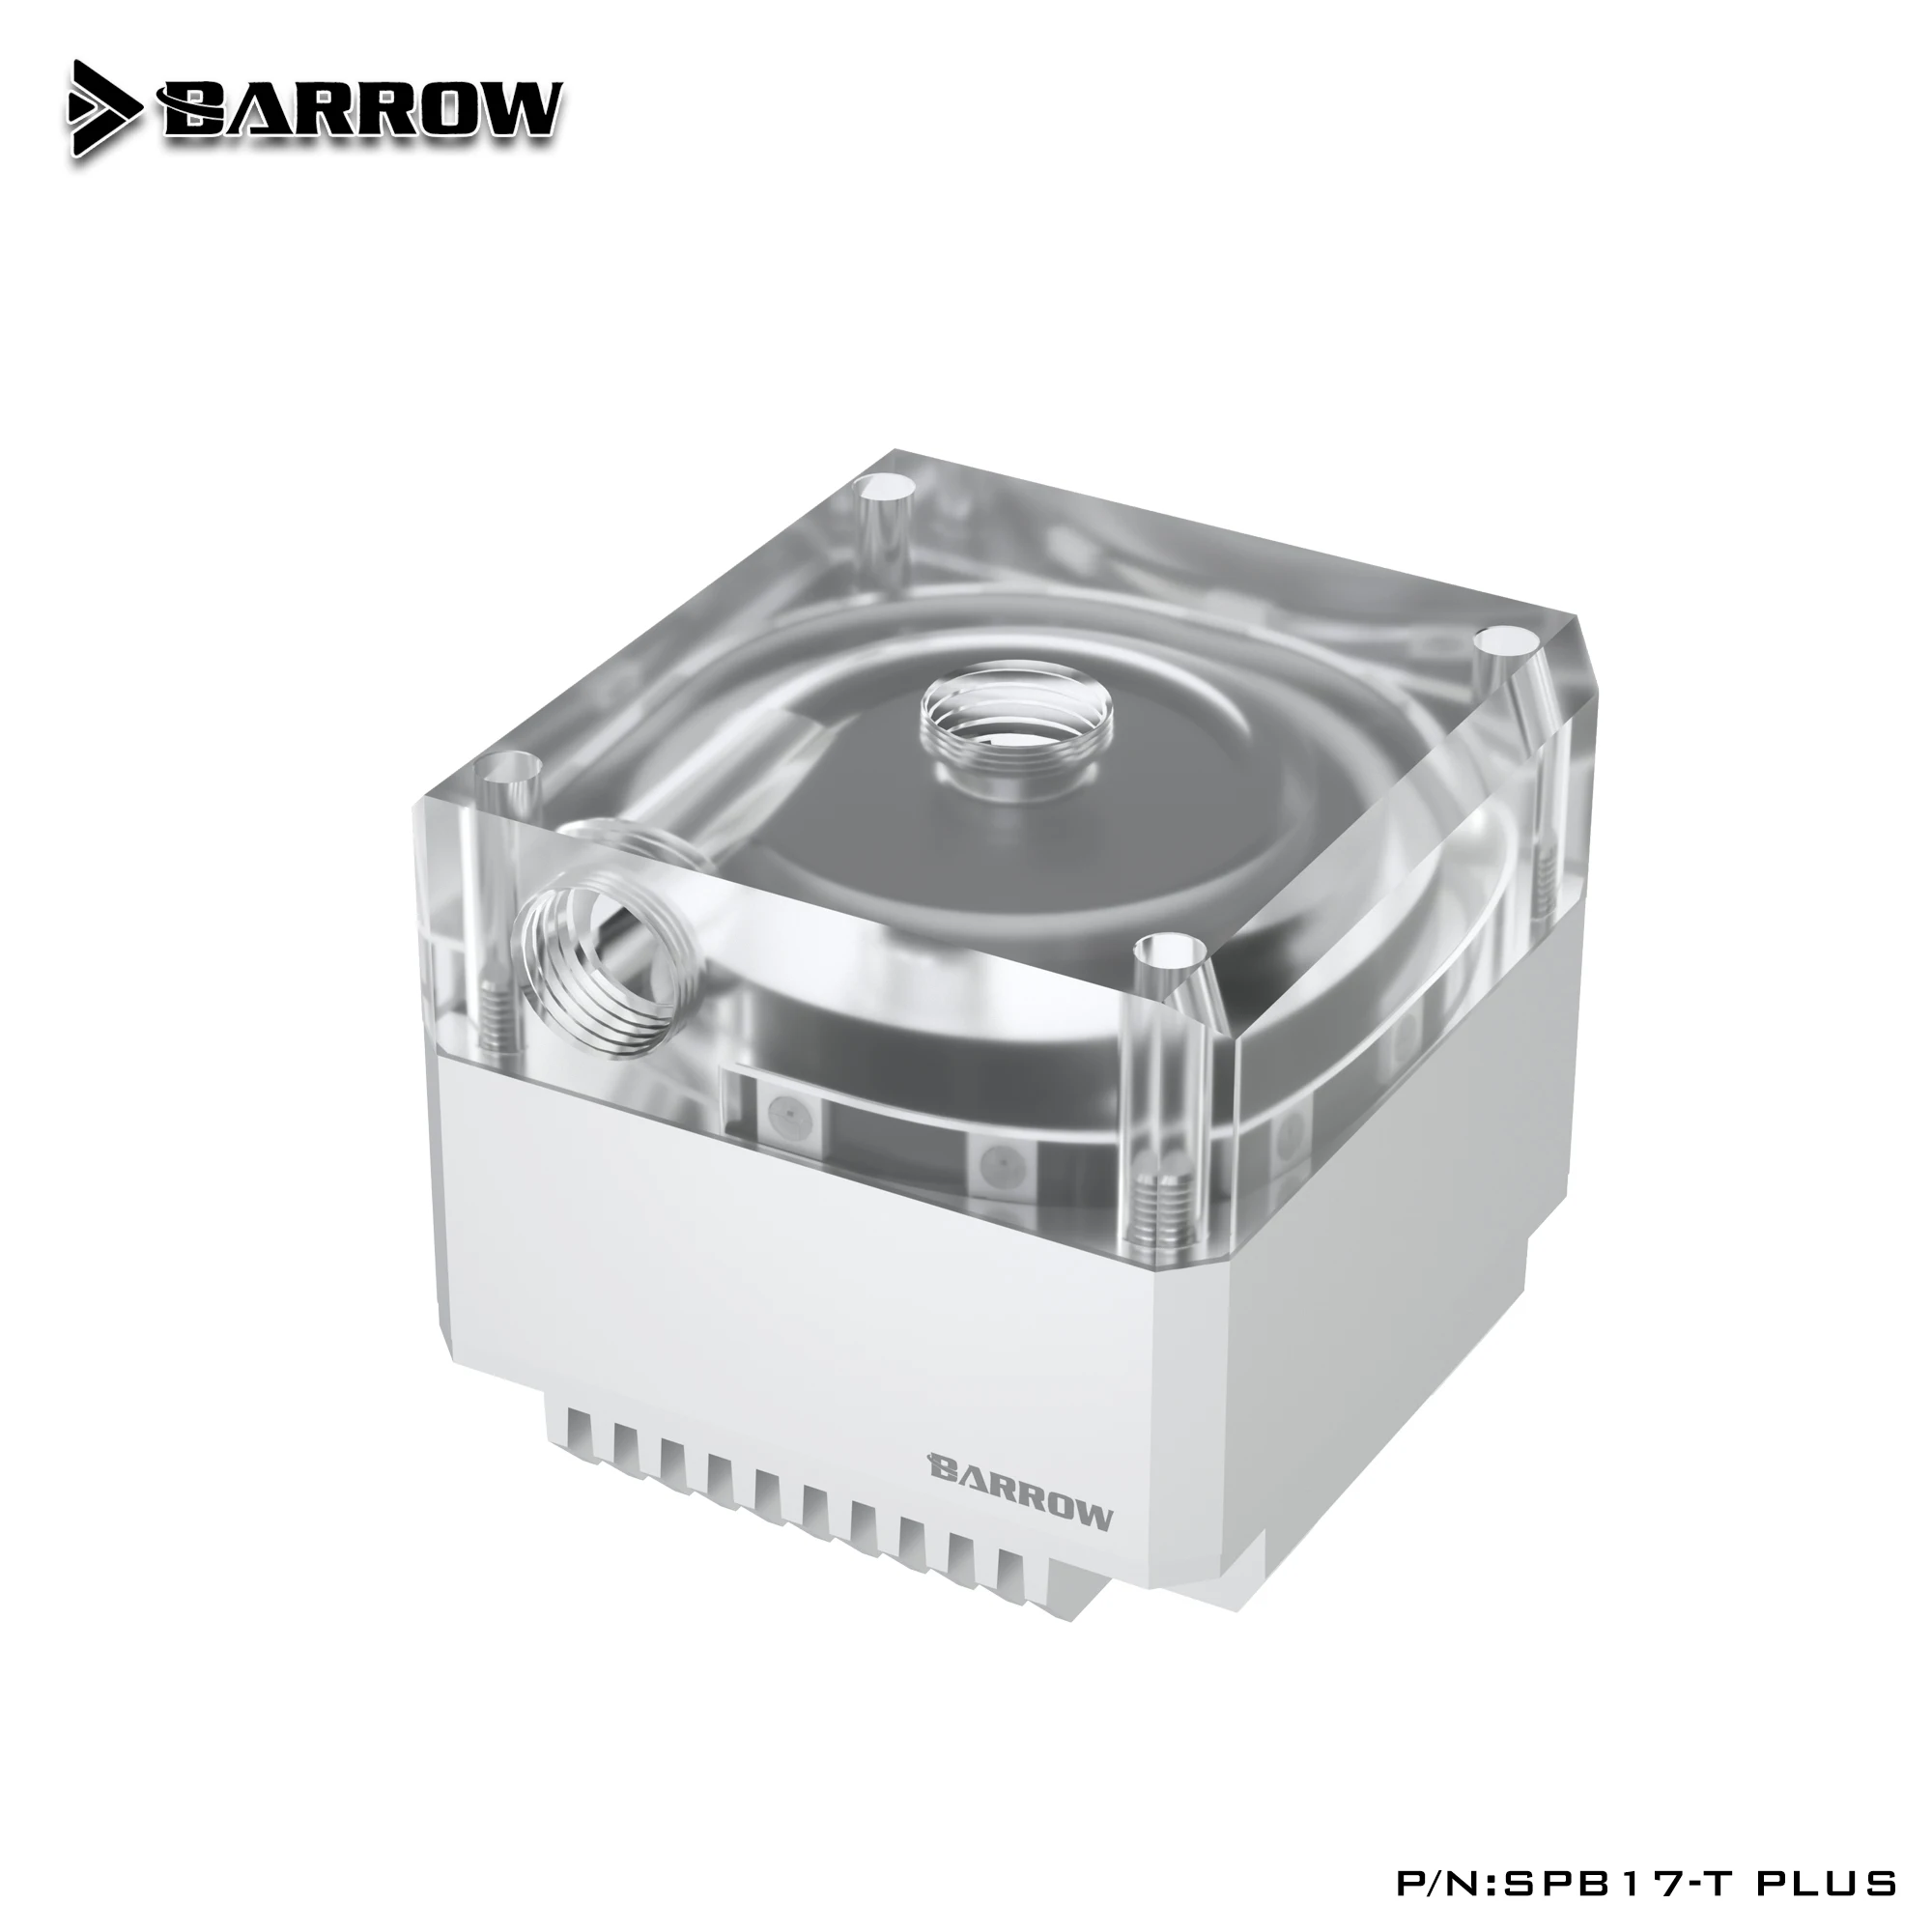 Barrow SPB17-T PLUS,PLUS Version 17W PWM Pumps,with Aluminum Radiator Cover,for Barrow Waterway Board